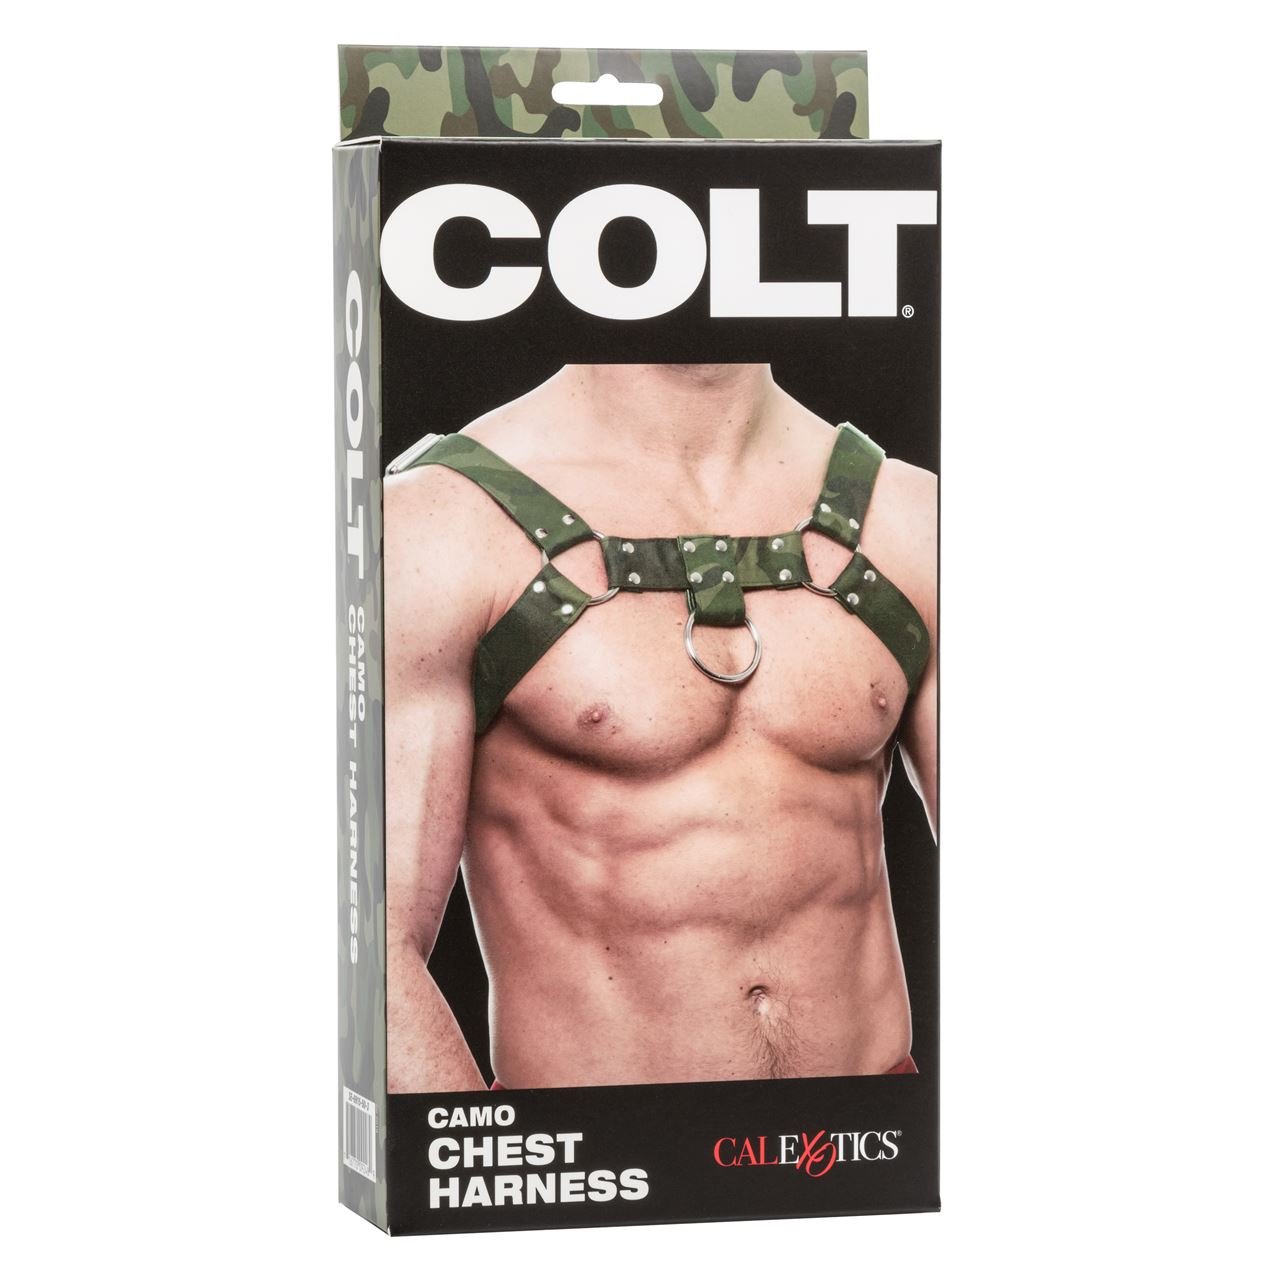 0019861_colt-camo-chest-harness_aorabaetvwtekxvi.jpeg